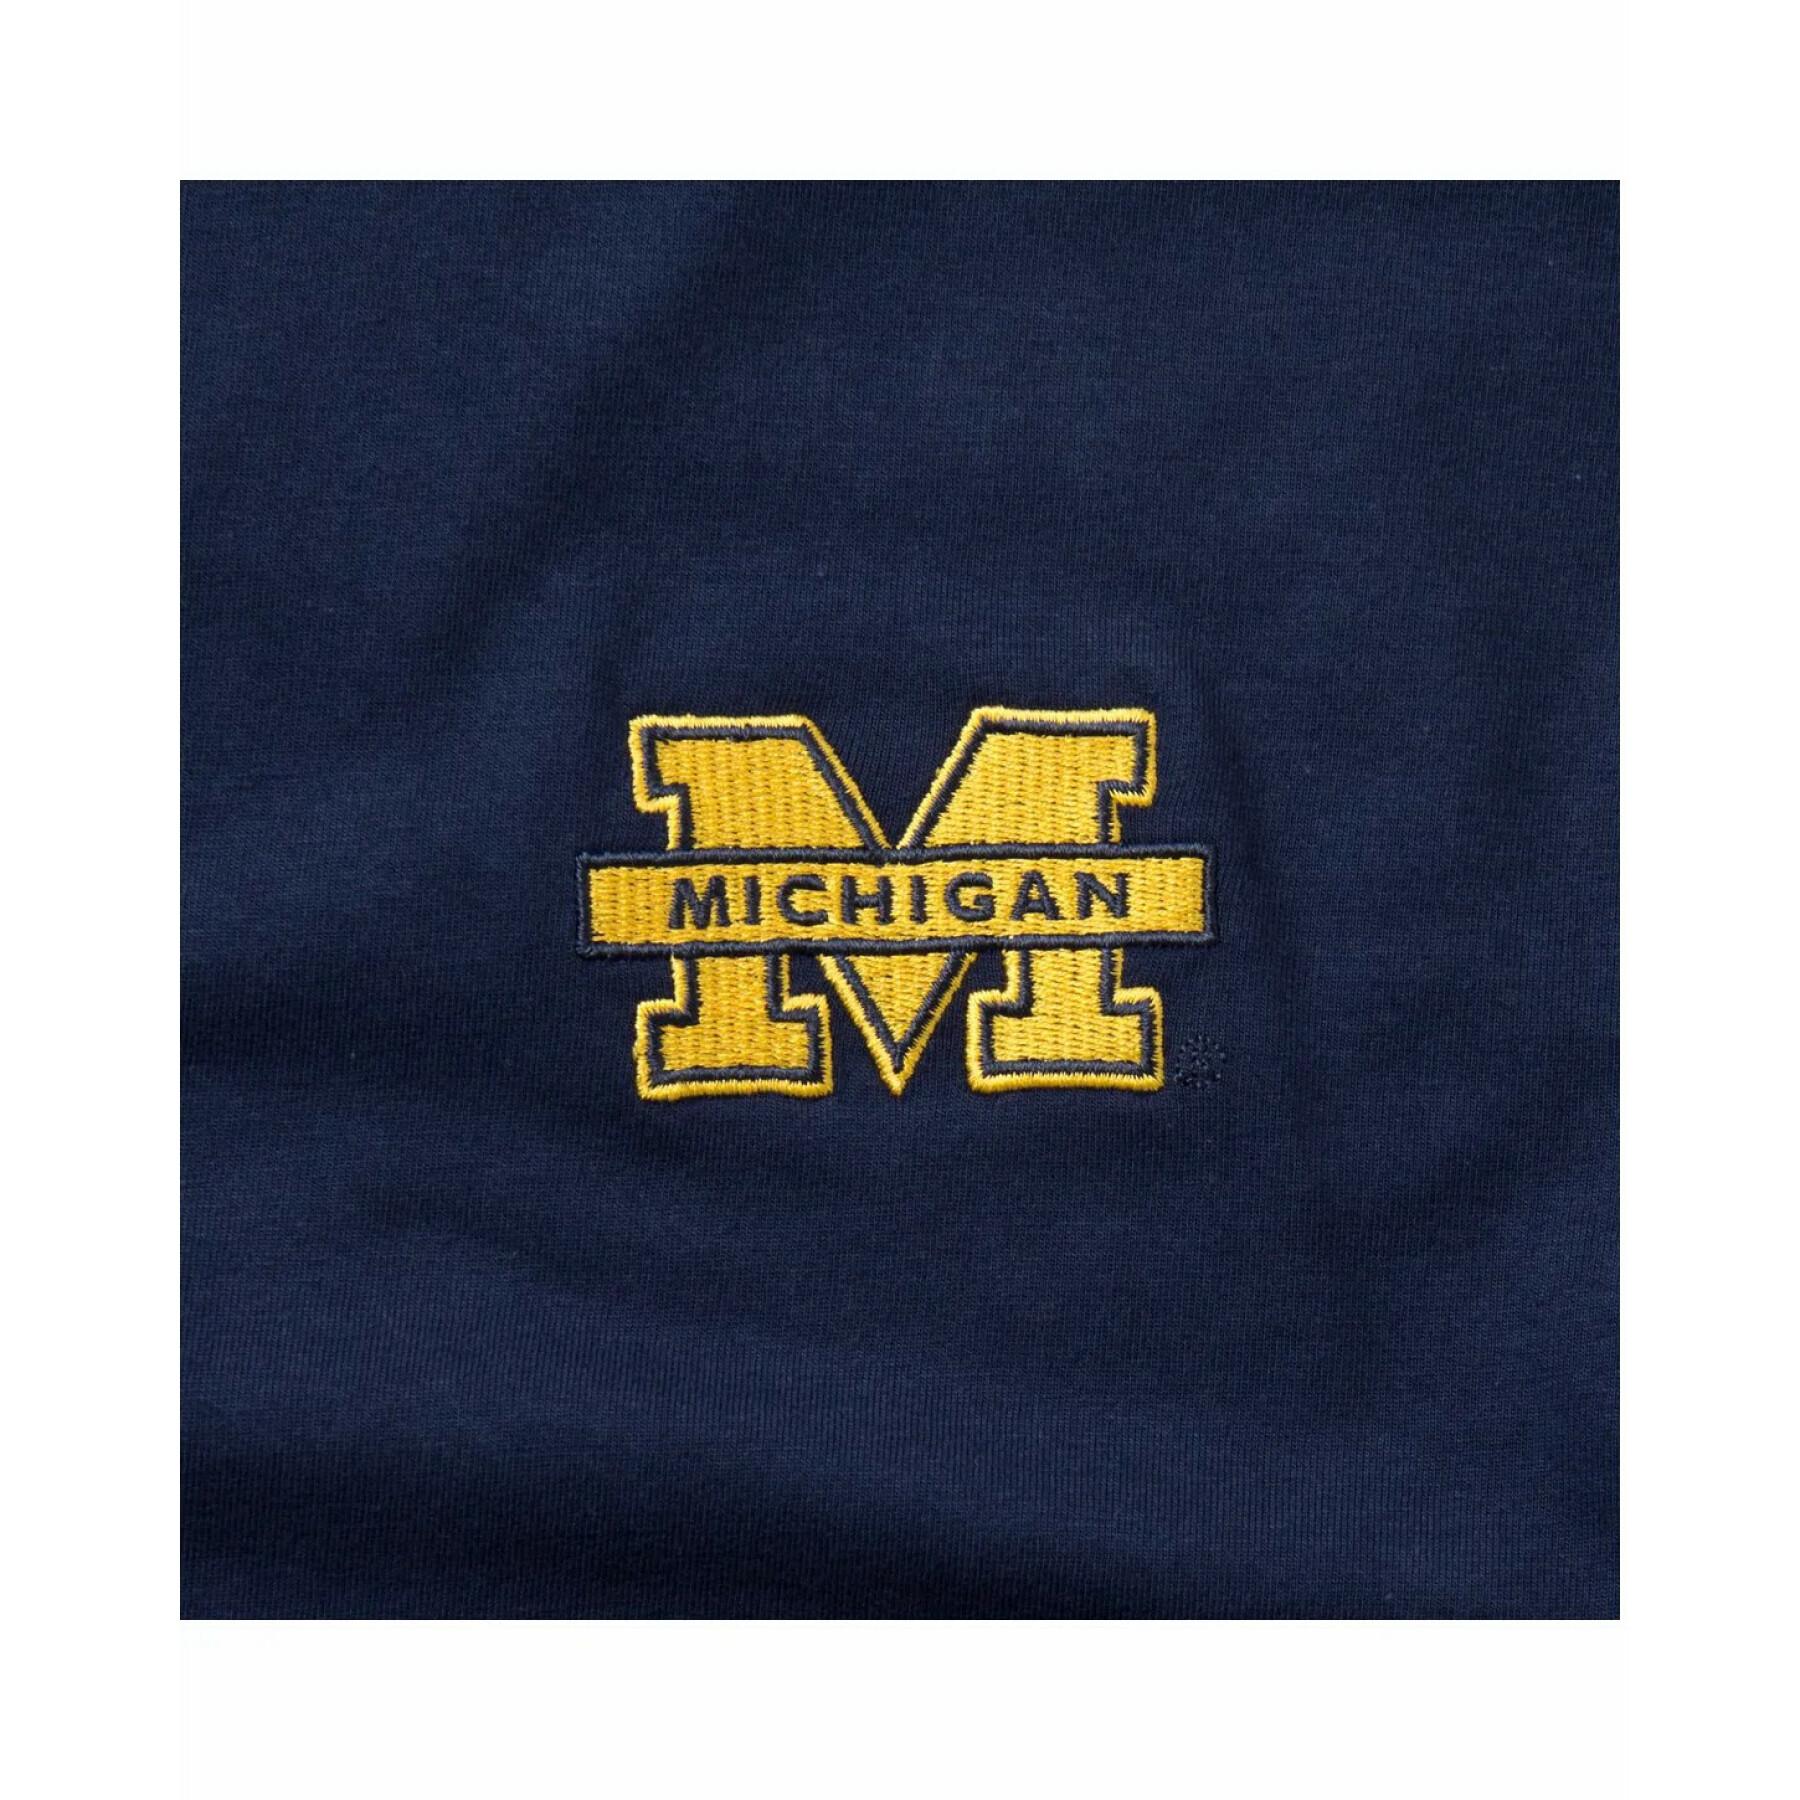 T-shirt University of Michigan embroidered logo